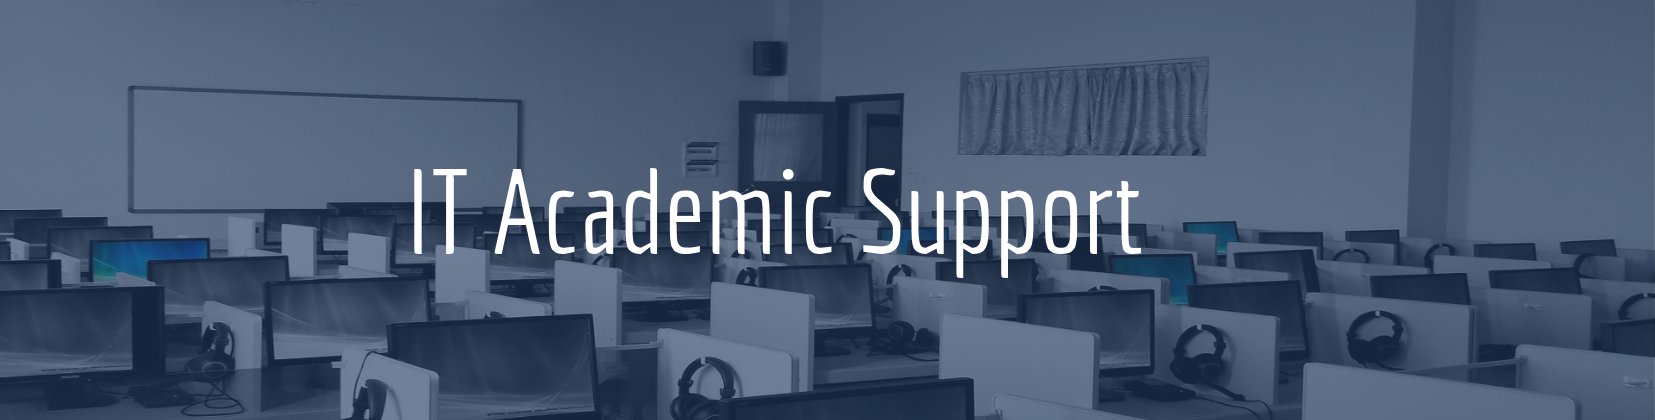 IT Academic Support Services  UTRGV School of Medicine